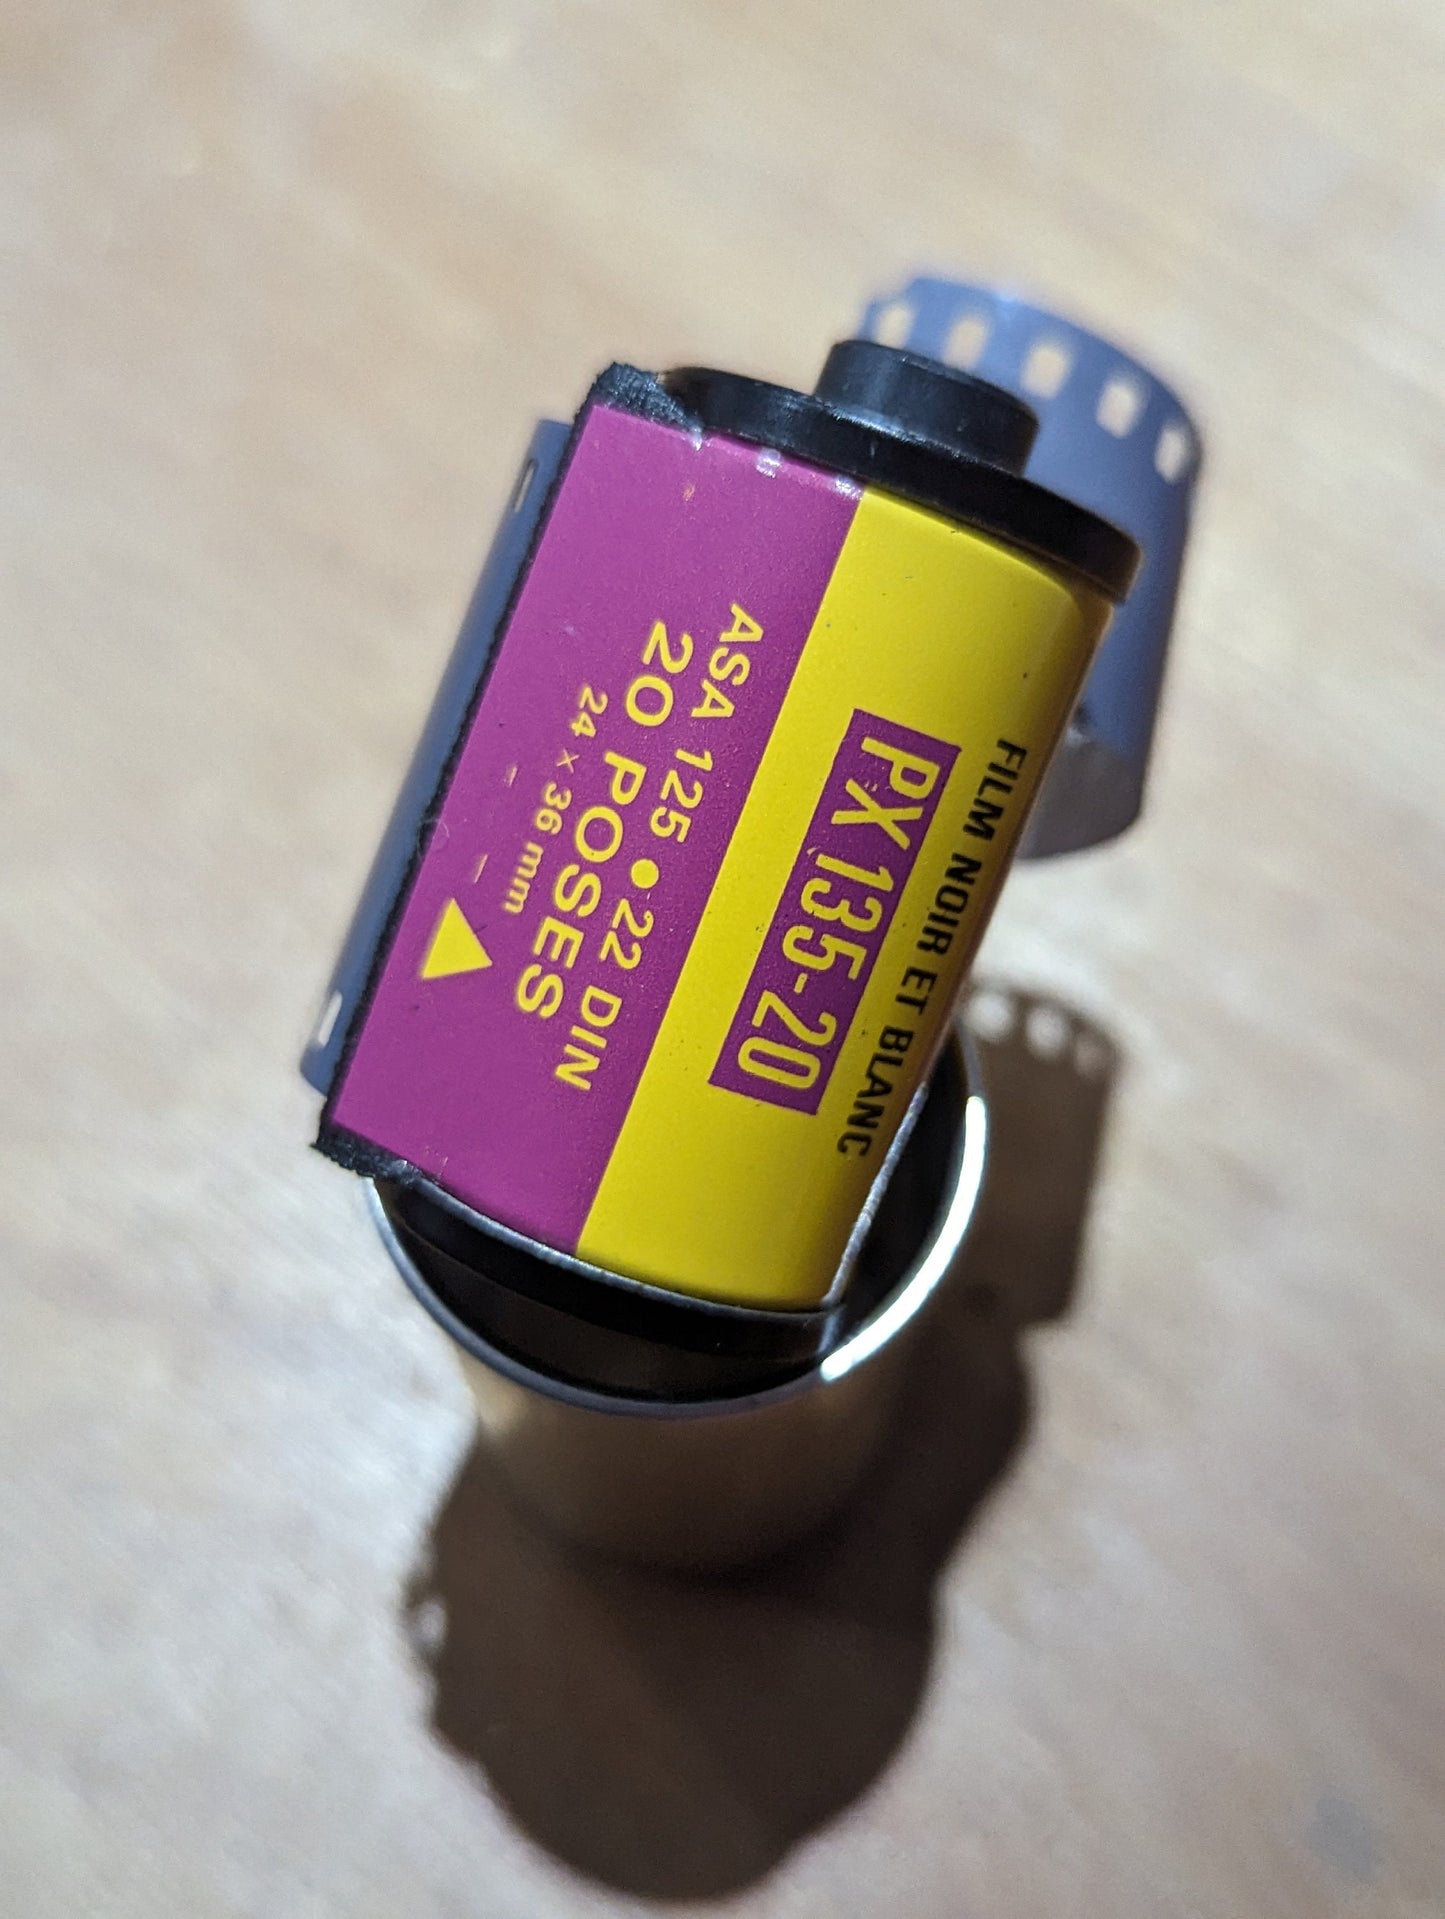 1970s Expired Film Kodak Plus-X Pan - Kodacolor II SEALED